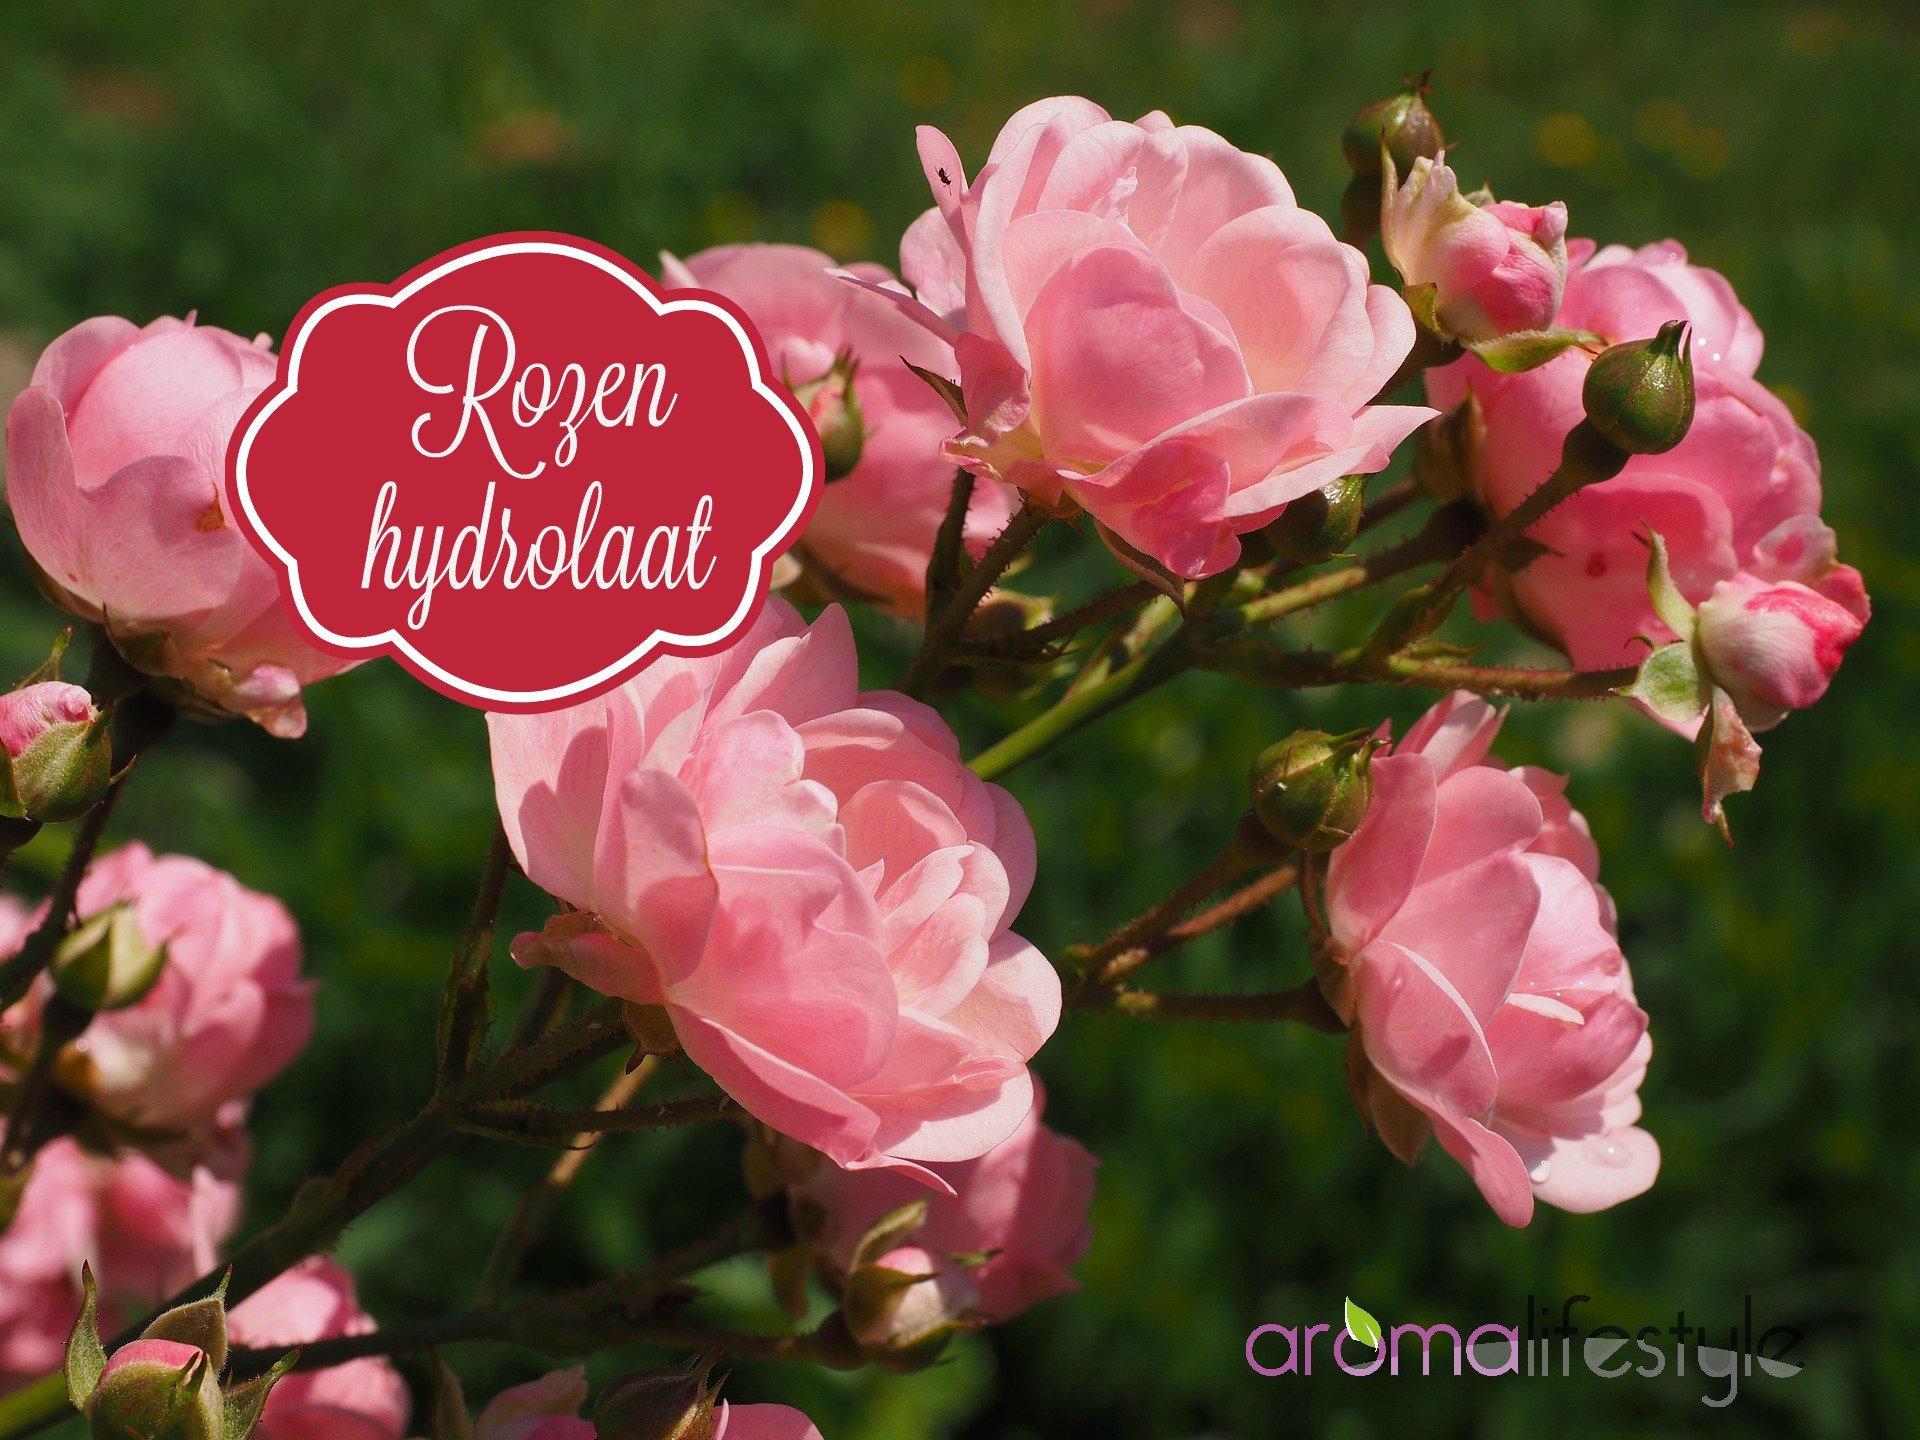 rozen hydrolaat